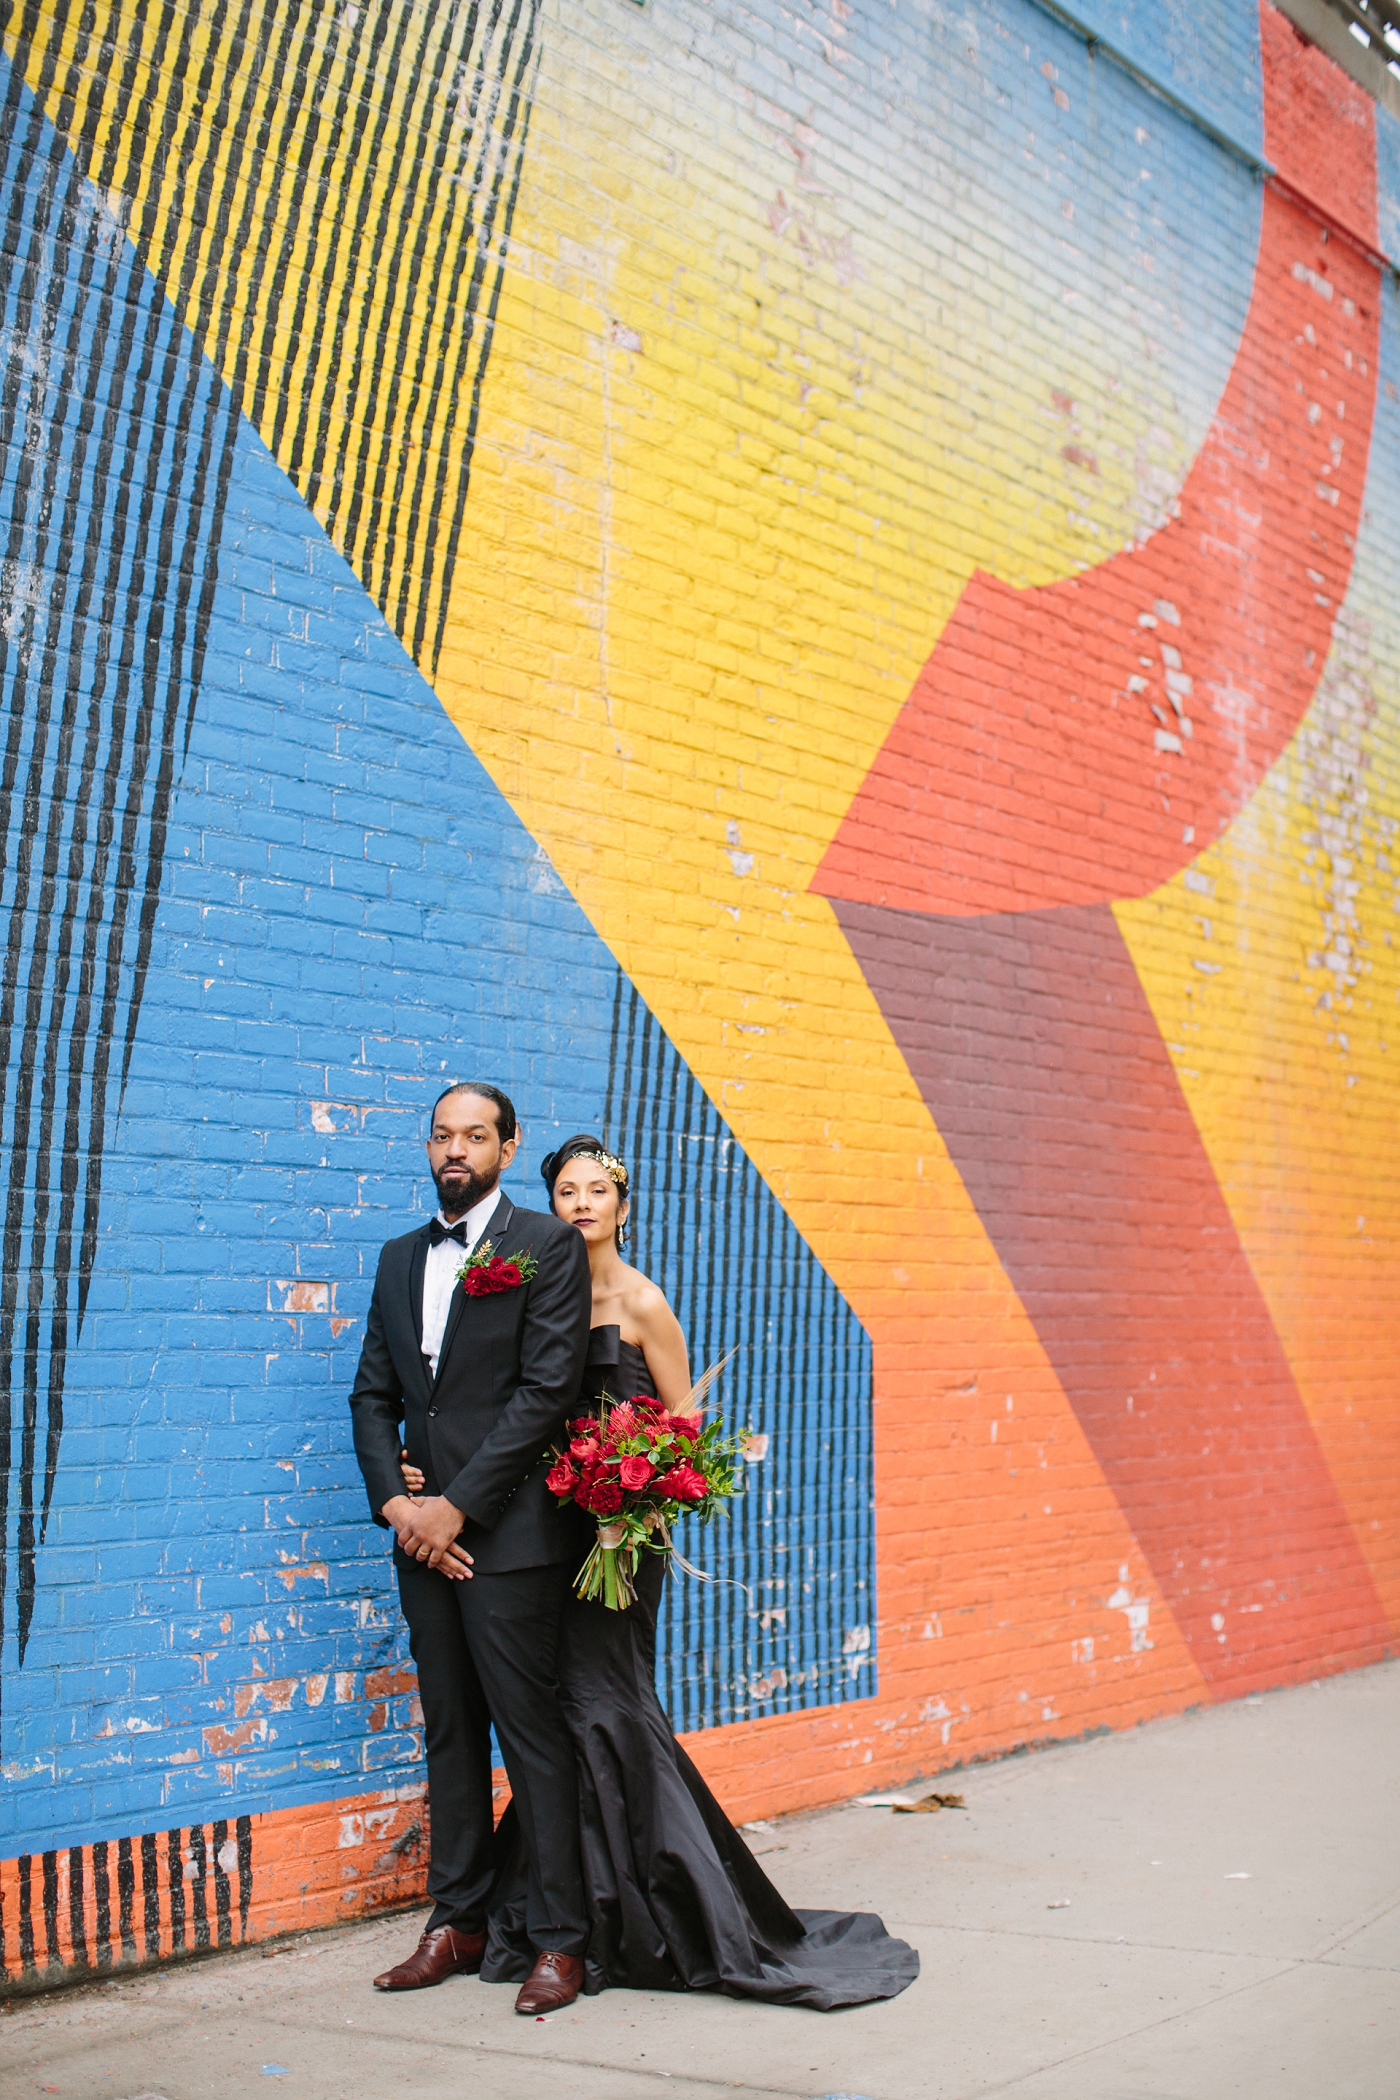 DUMBO New york city wedding photography by Samantha Clarke